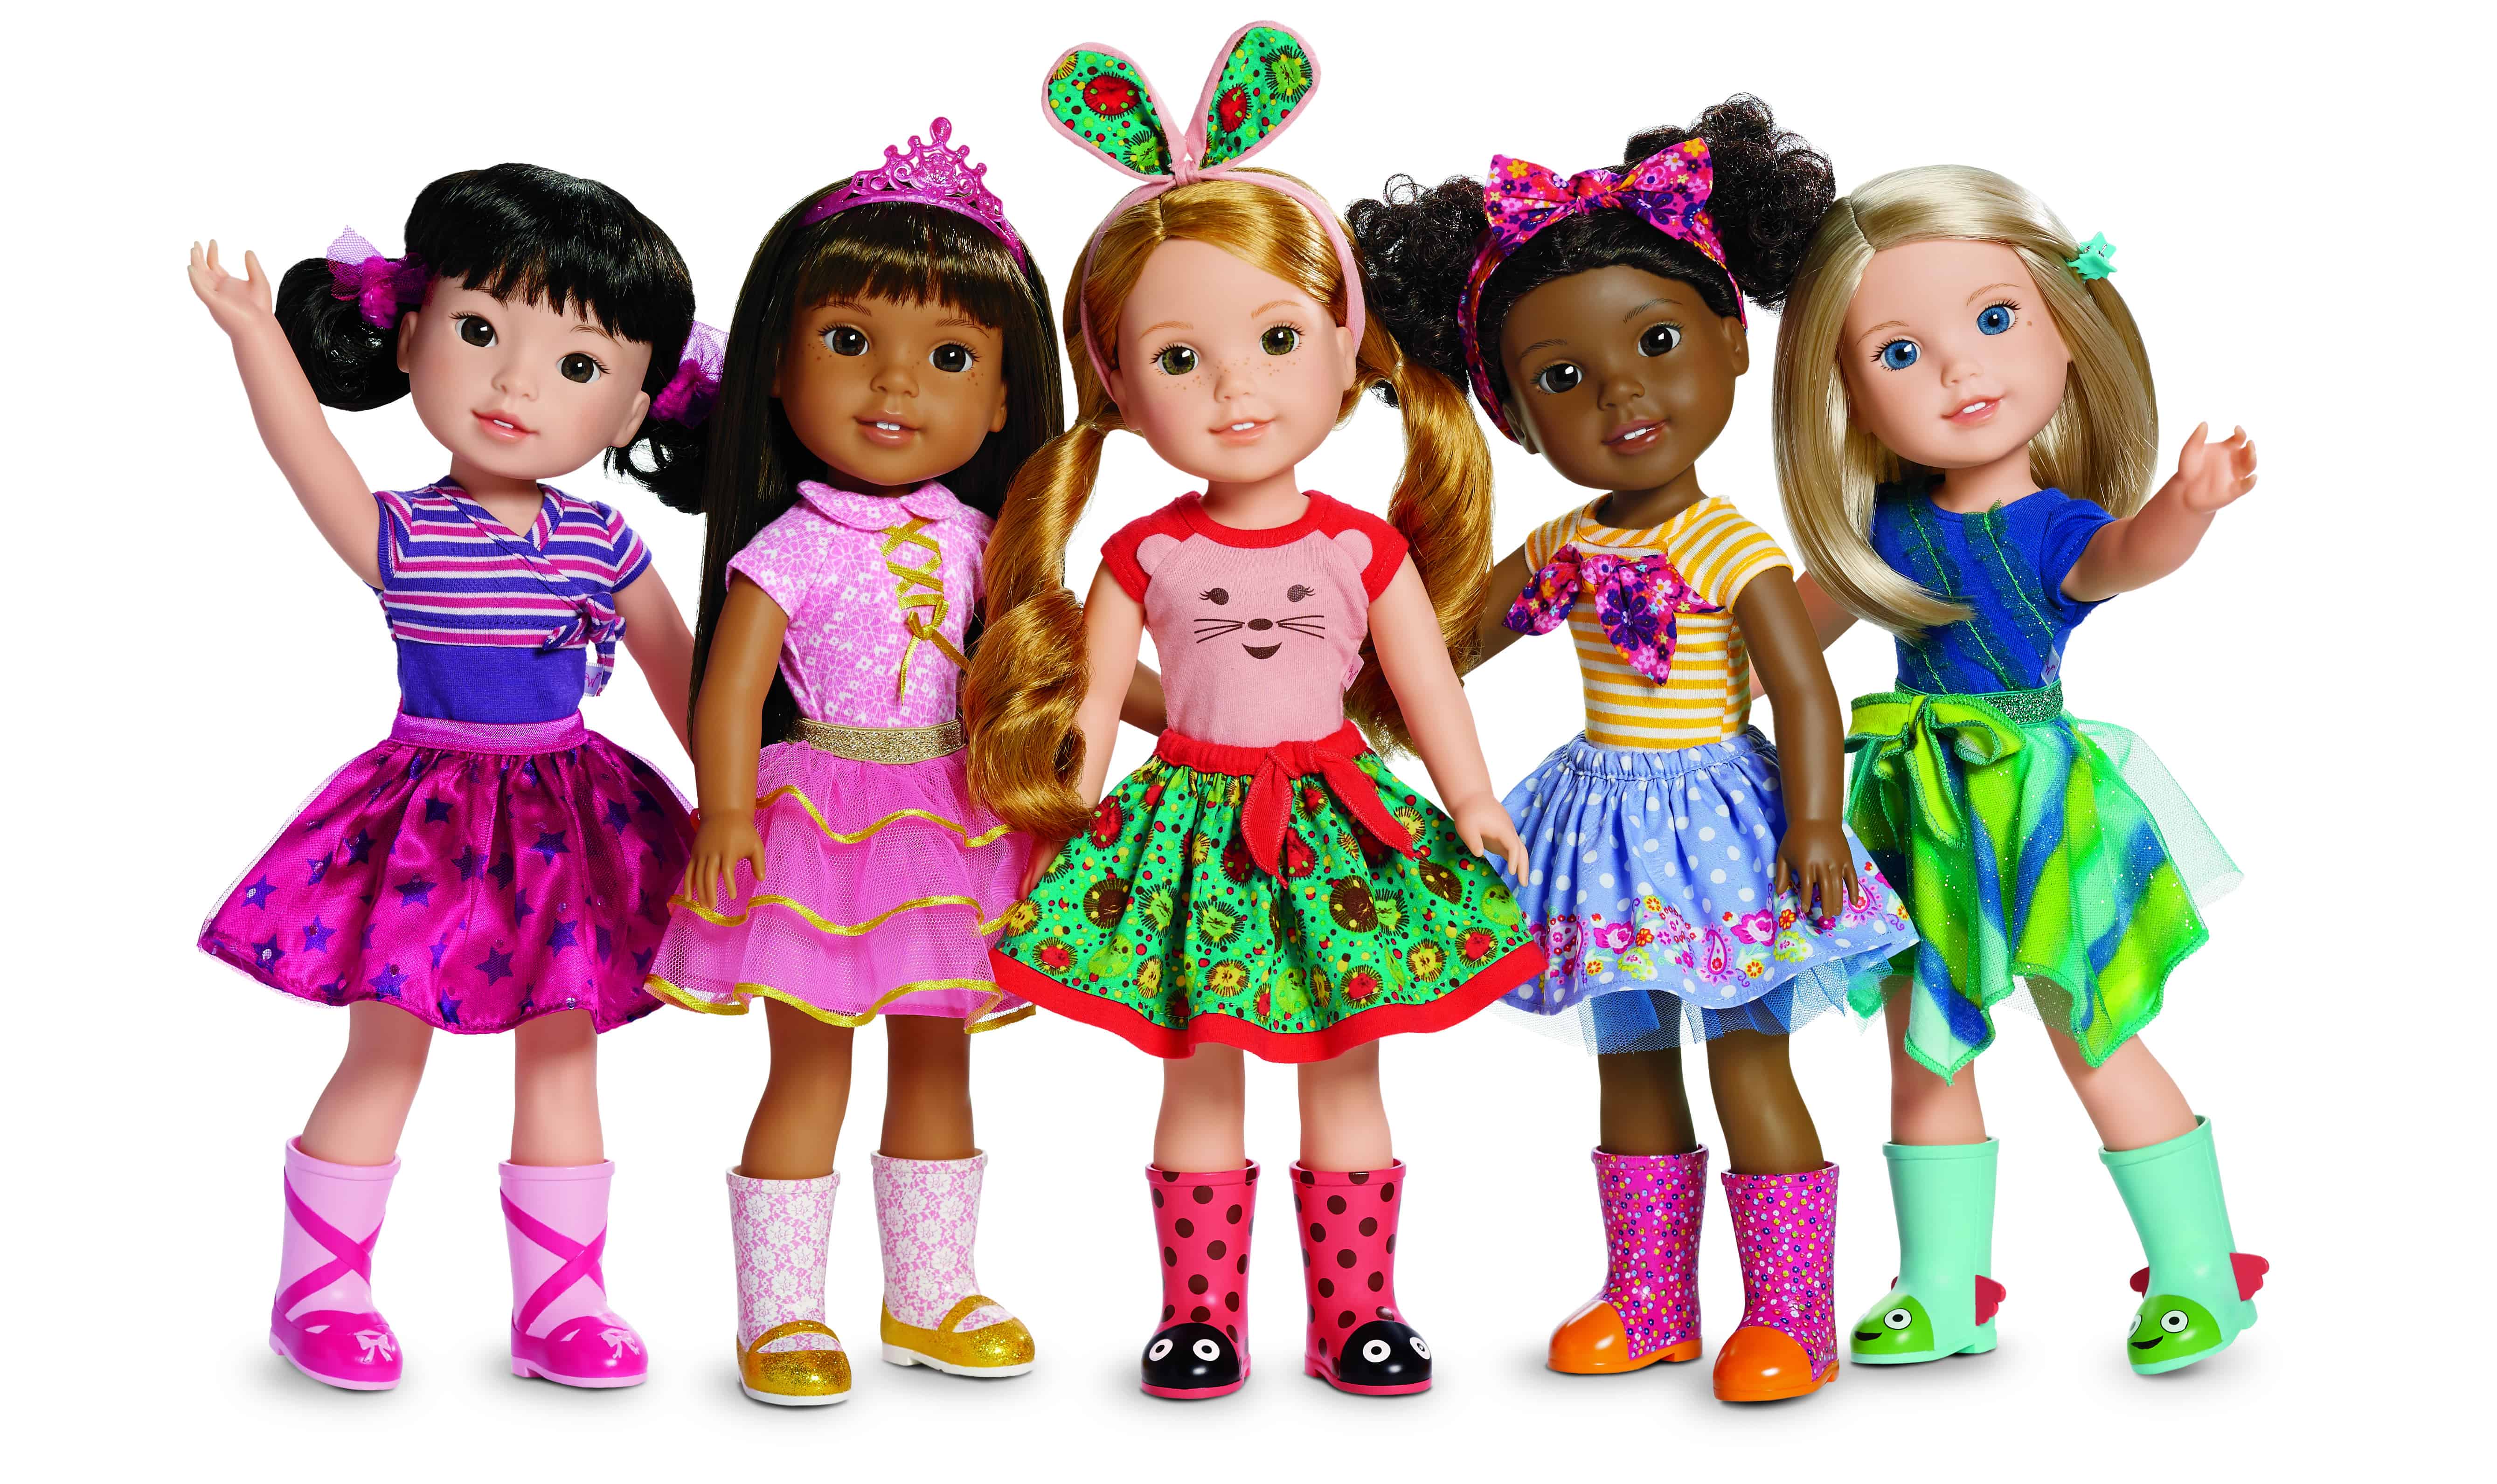 Музыка куклы детские. Американ гёрл. Куклы для девочек. Современные куклы. Популярные куклы.